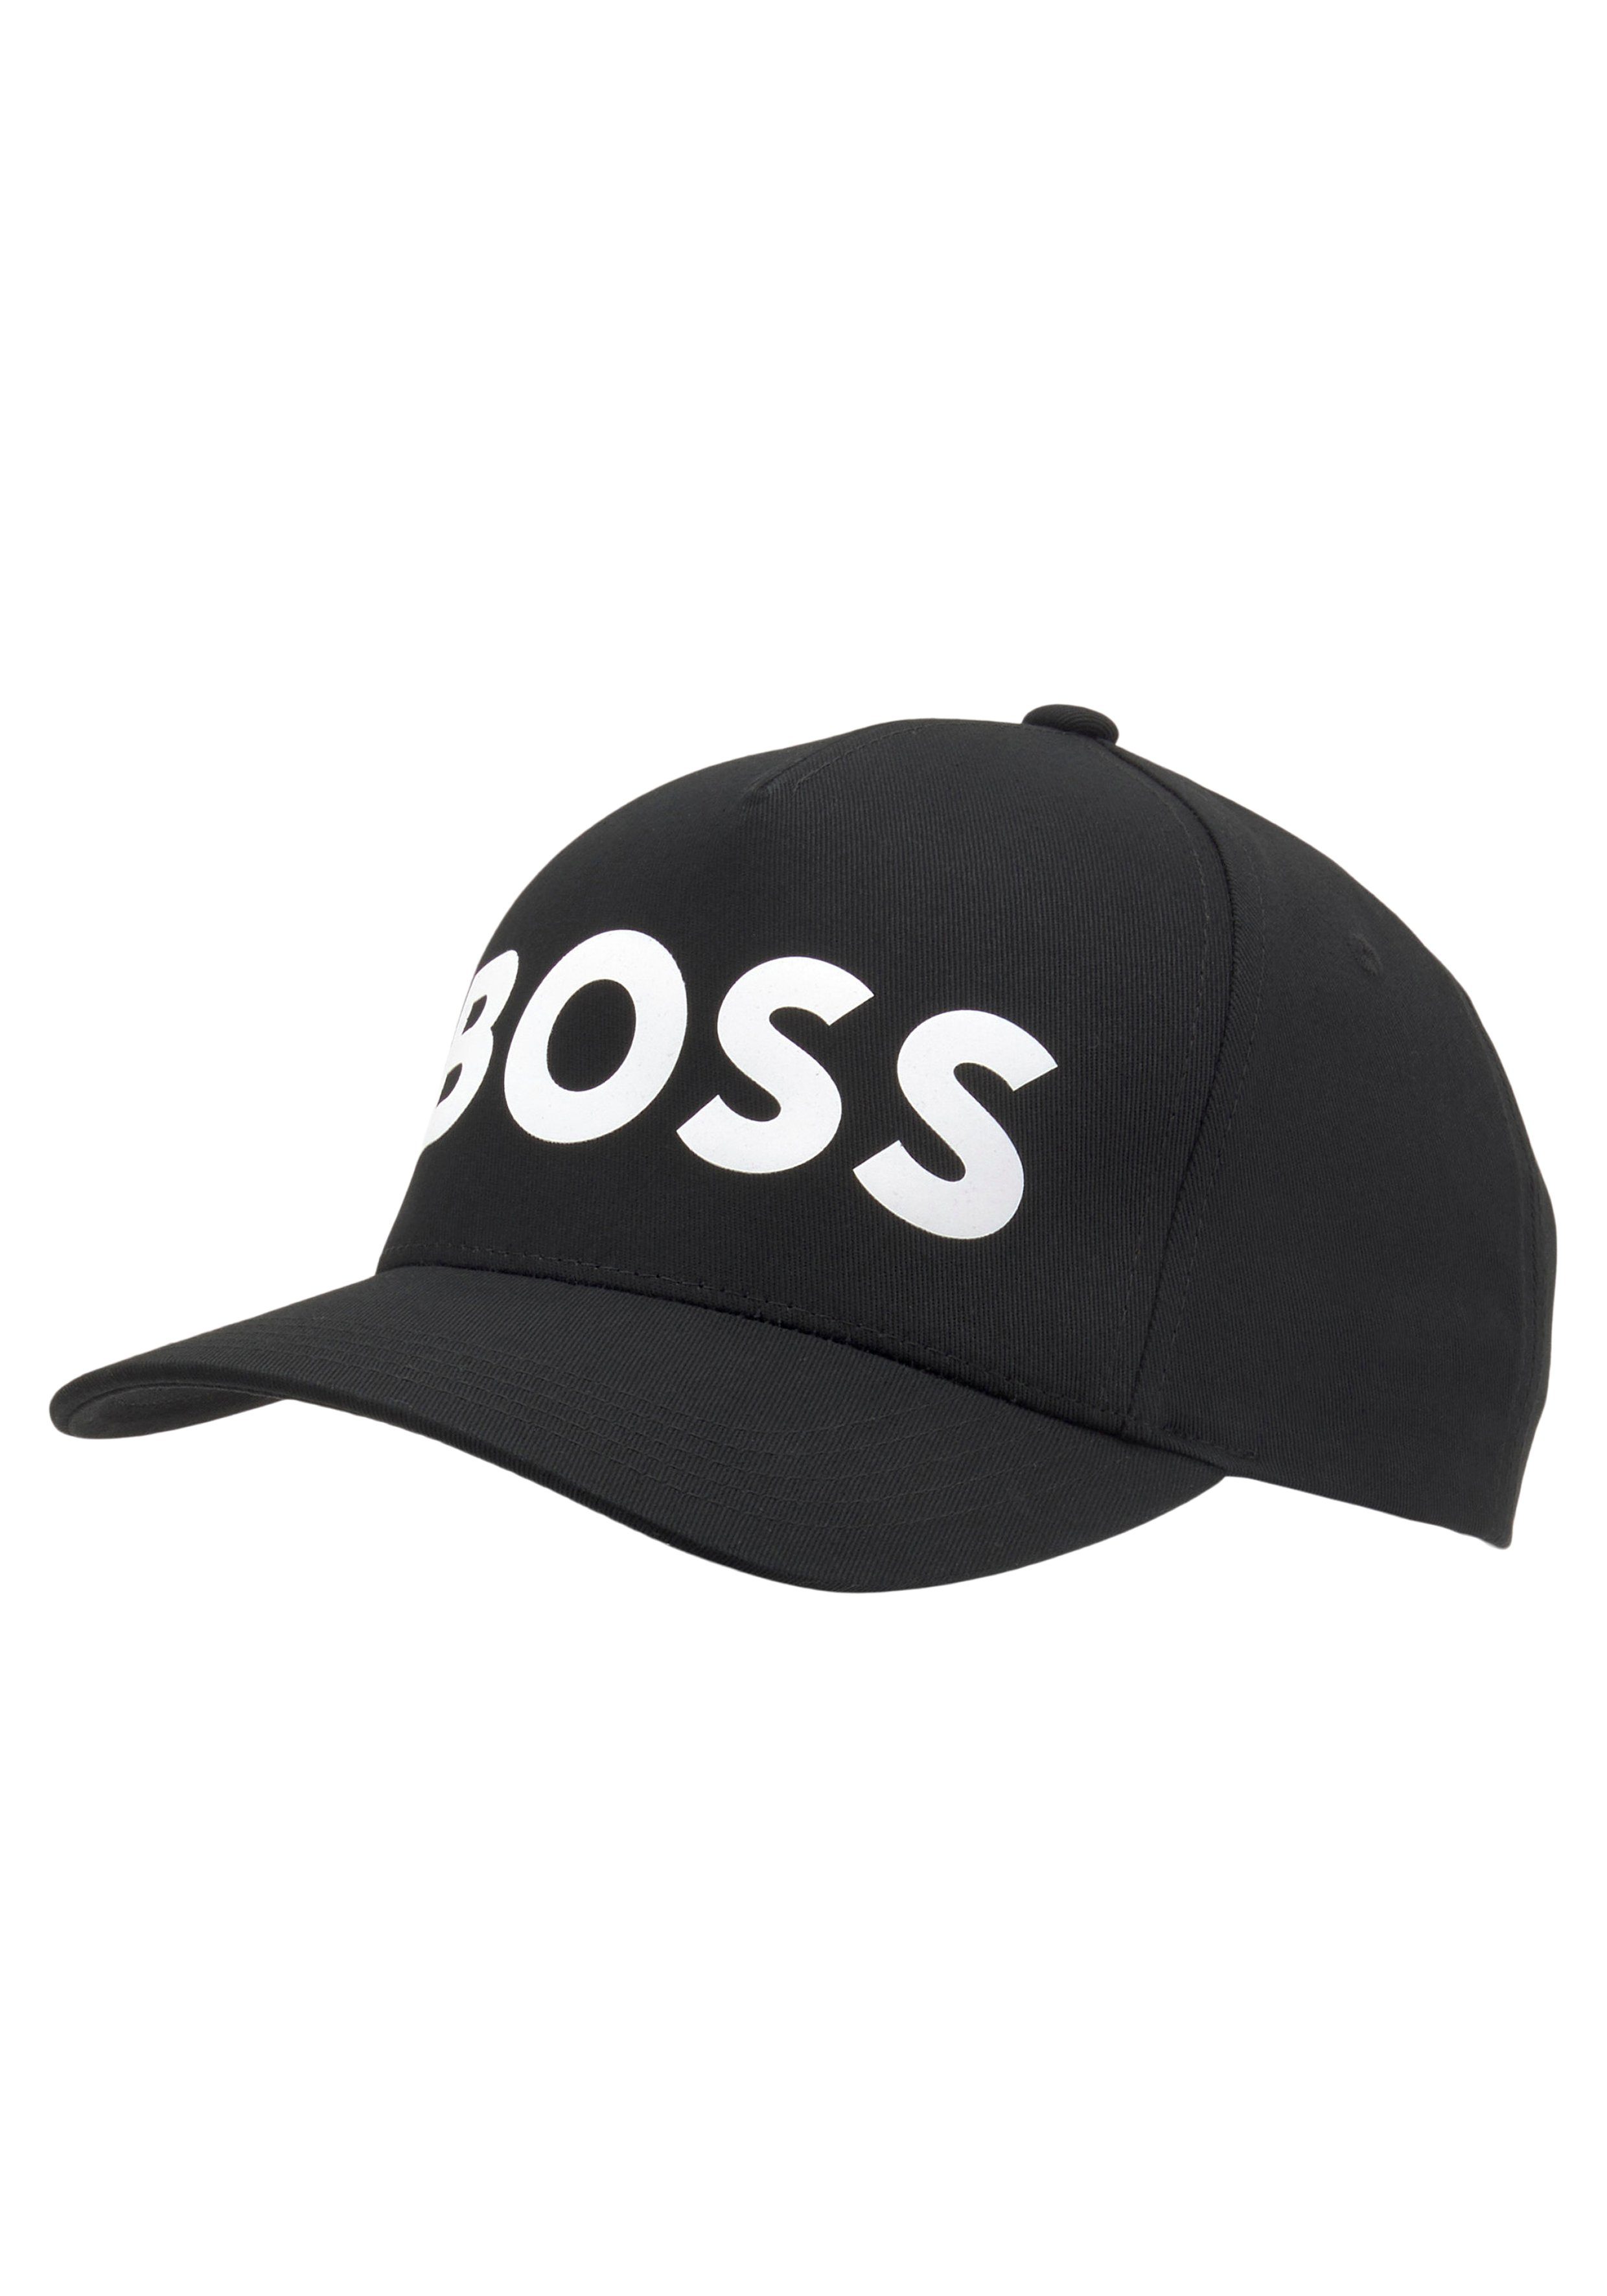 Outfit ab Rundet BOSS ideal Sevile-BOSS-5 mit Logodruck, Cap Baseball jedes